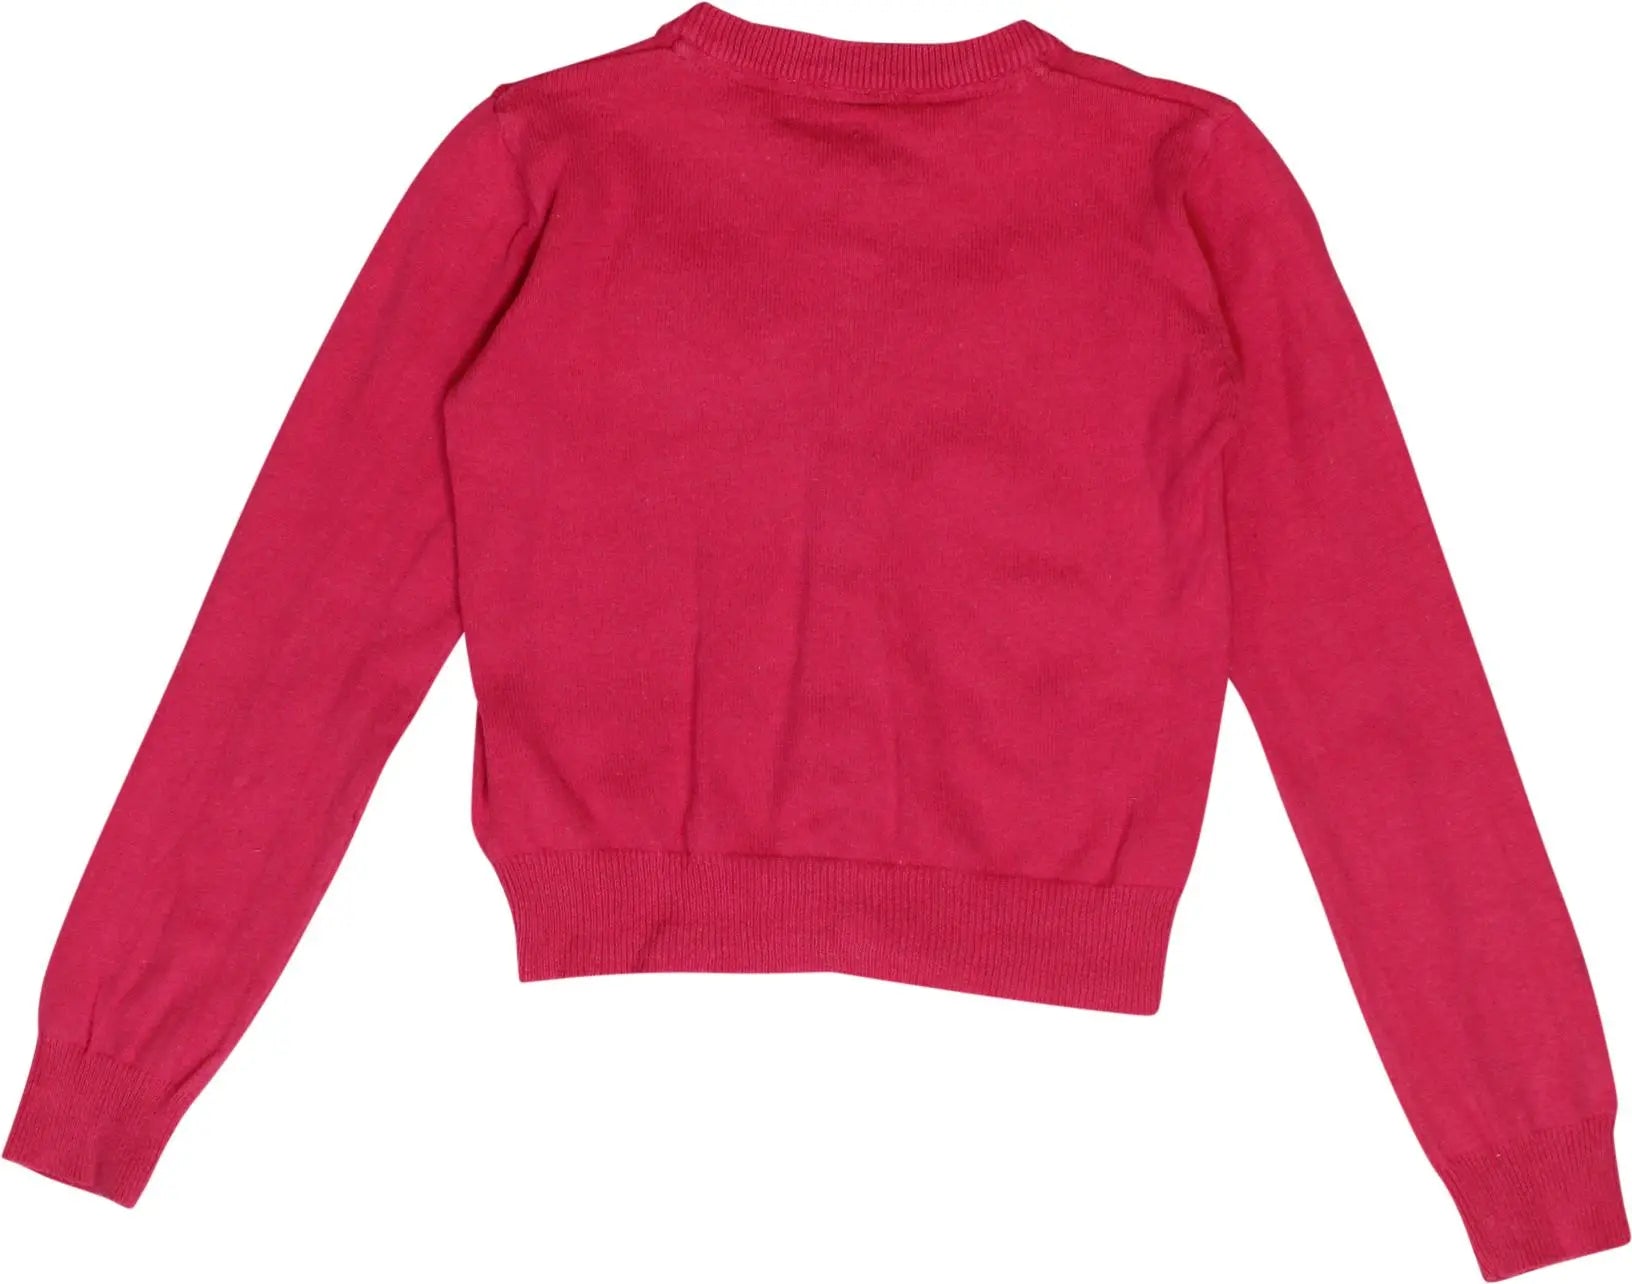 Zeeman - Pink Cardigan- ThriftTale.com - Vintage and second handclothing